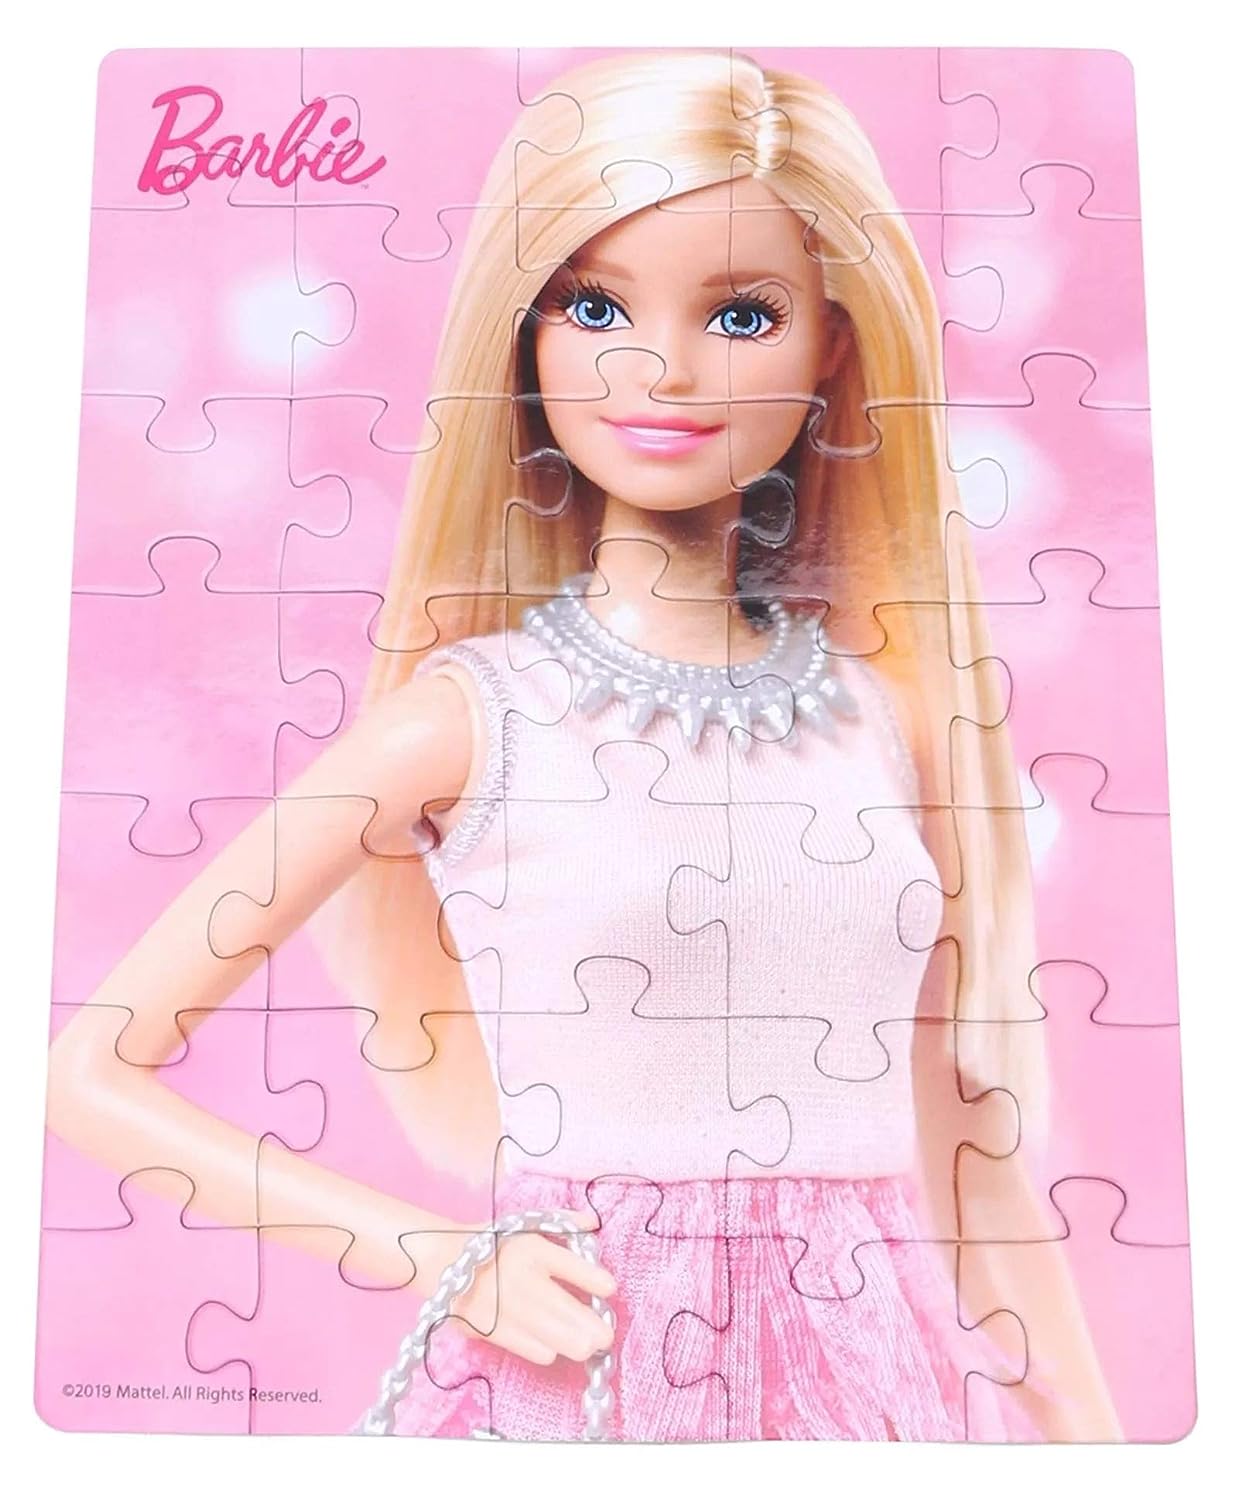 RATNA'S Barbie Jigsaw 4 in 1. 4 Different Jumbo Jigsaw Puzzles for Gir –  MRGTOYS